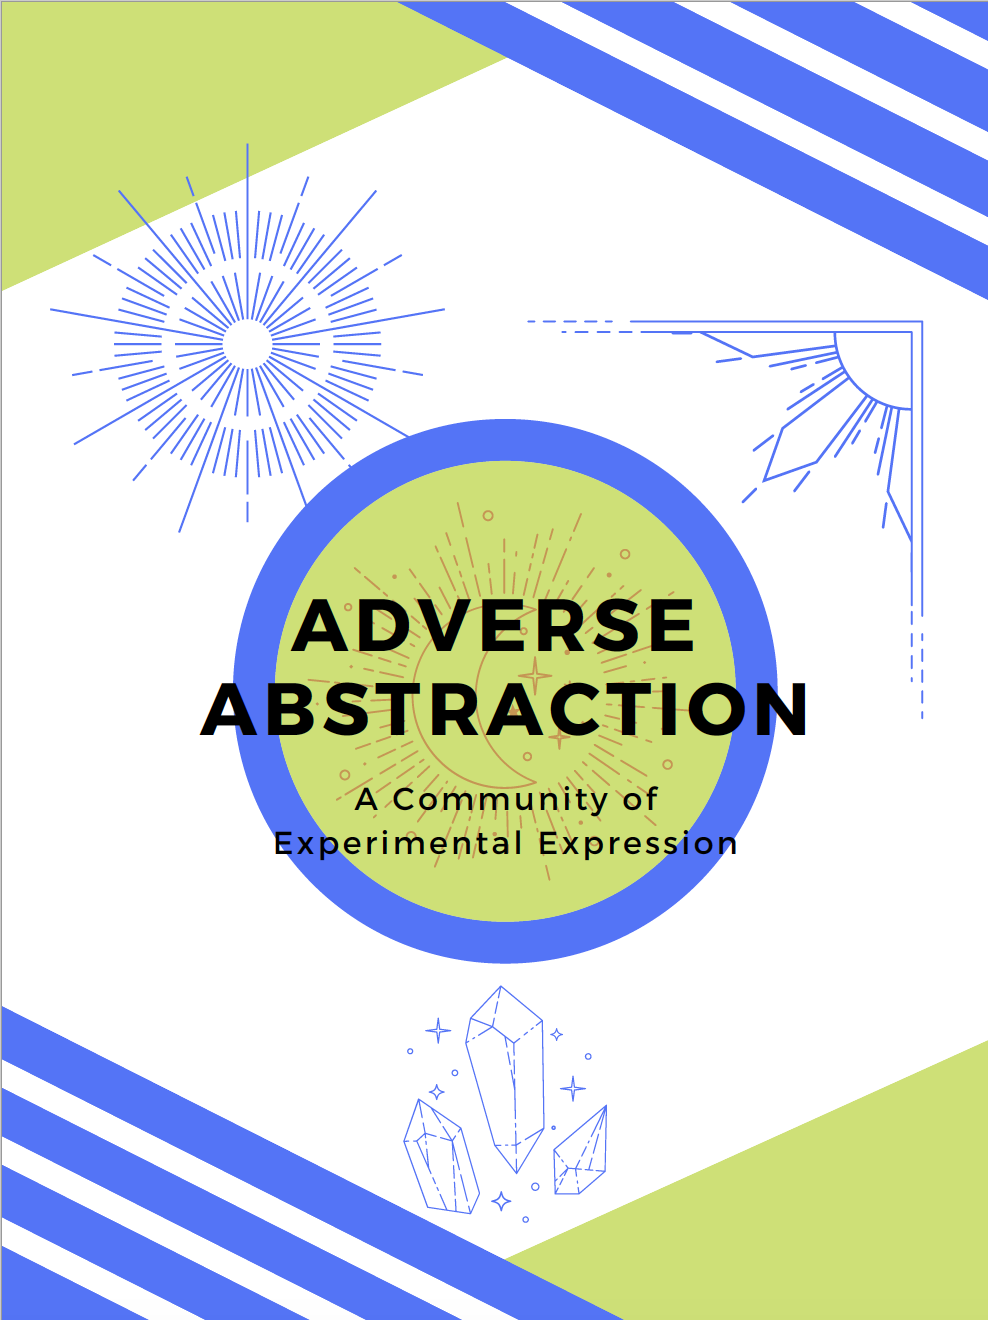 Adverse Abstraction Logo